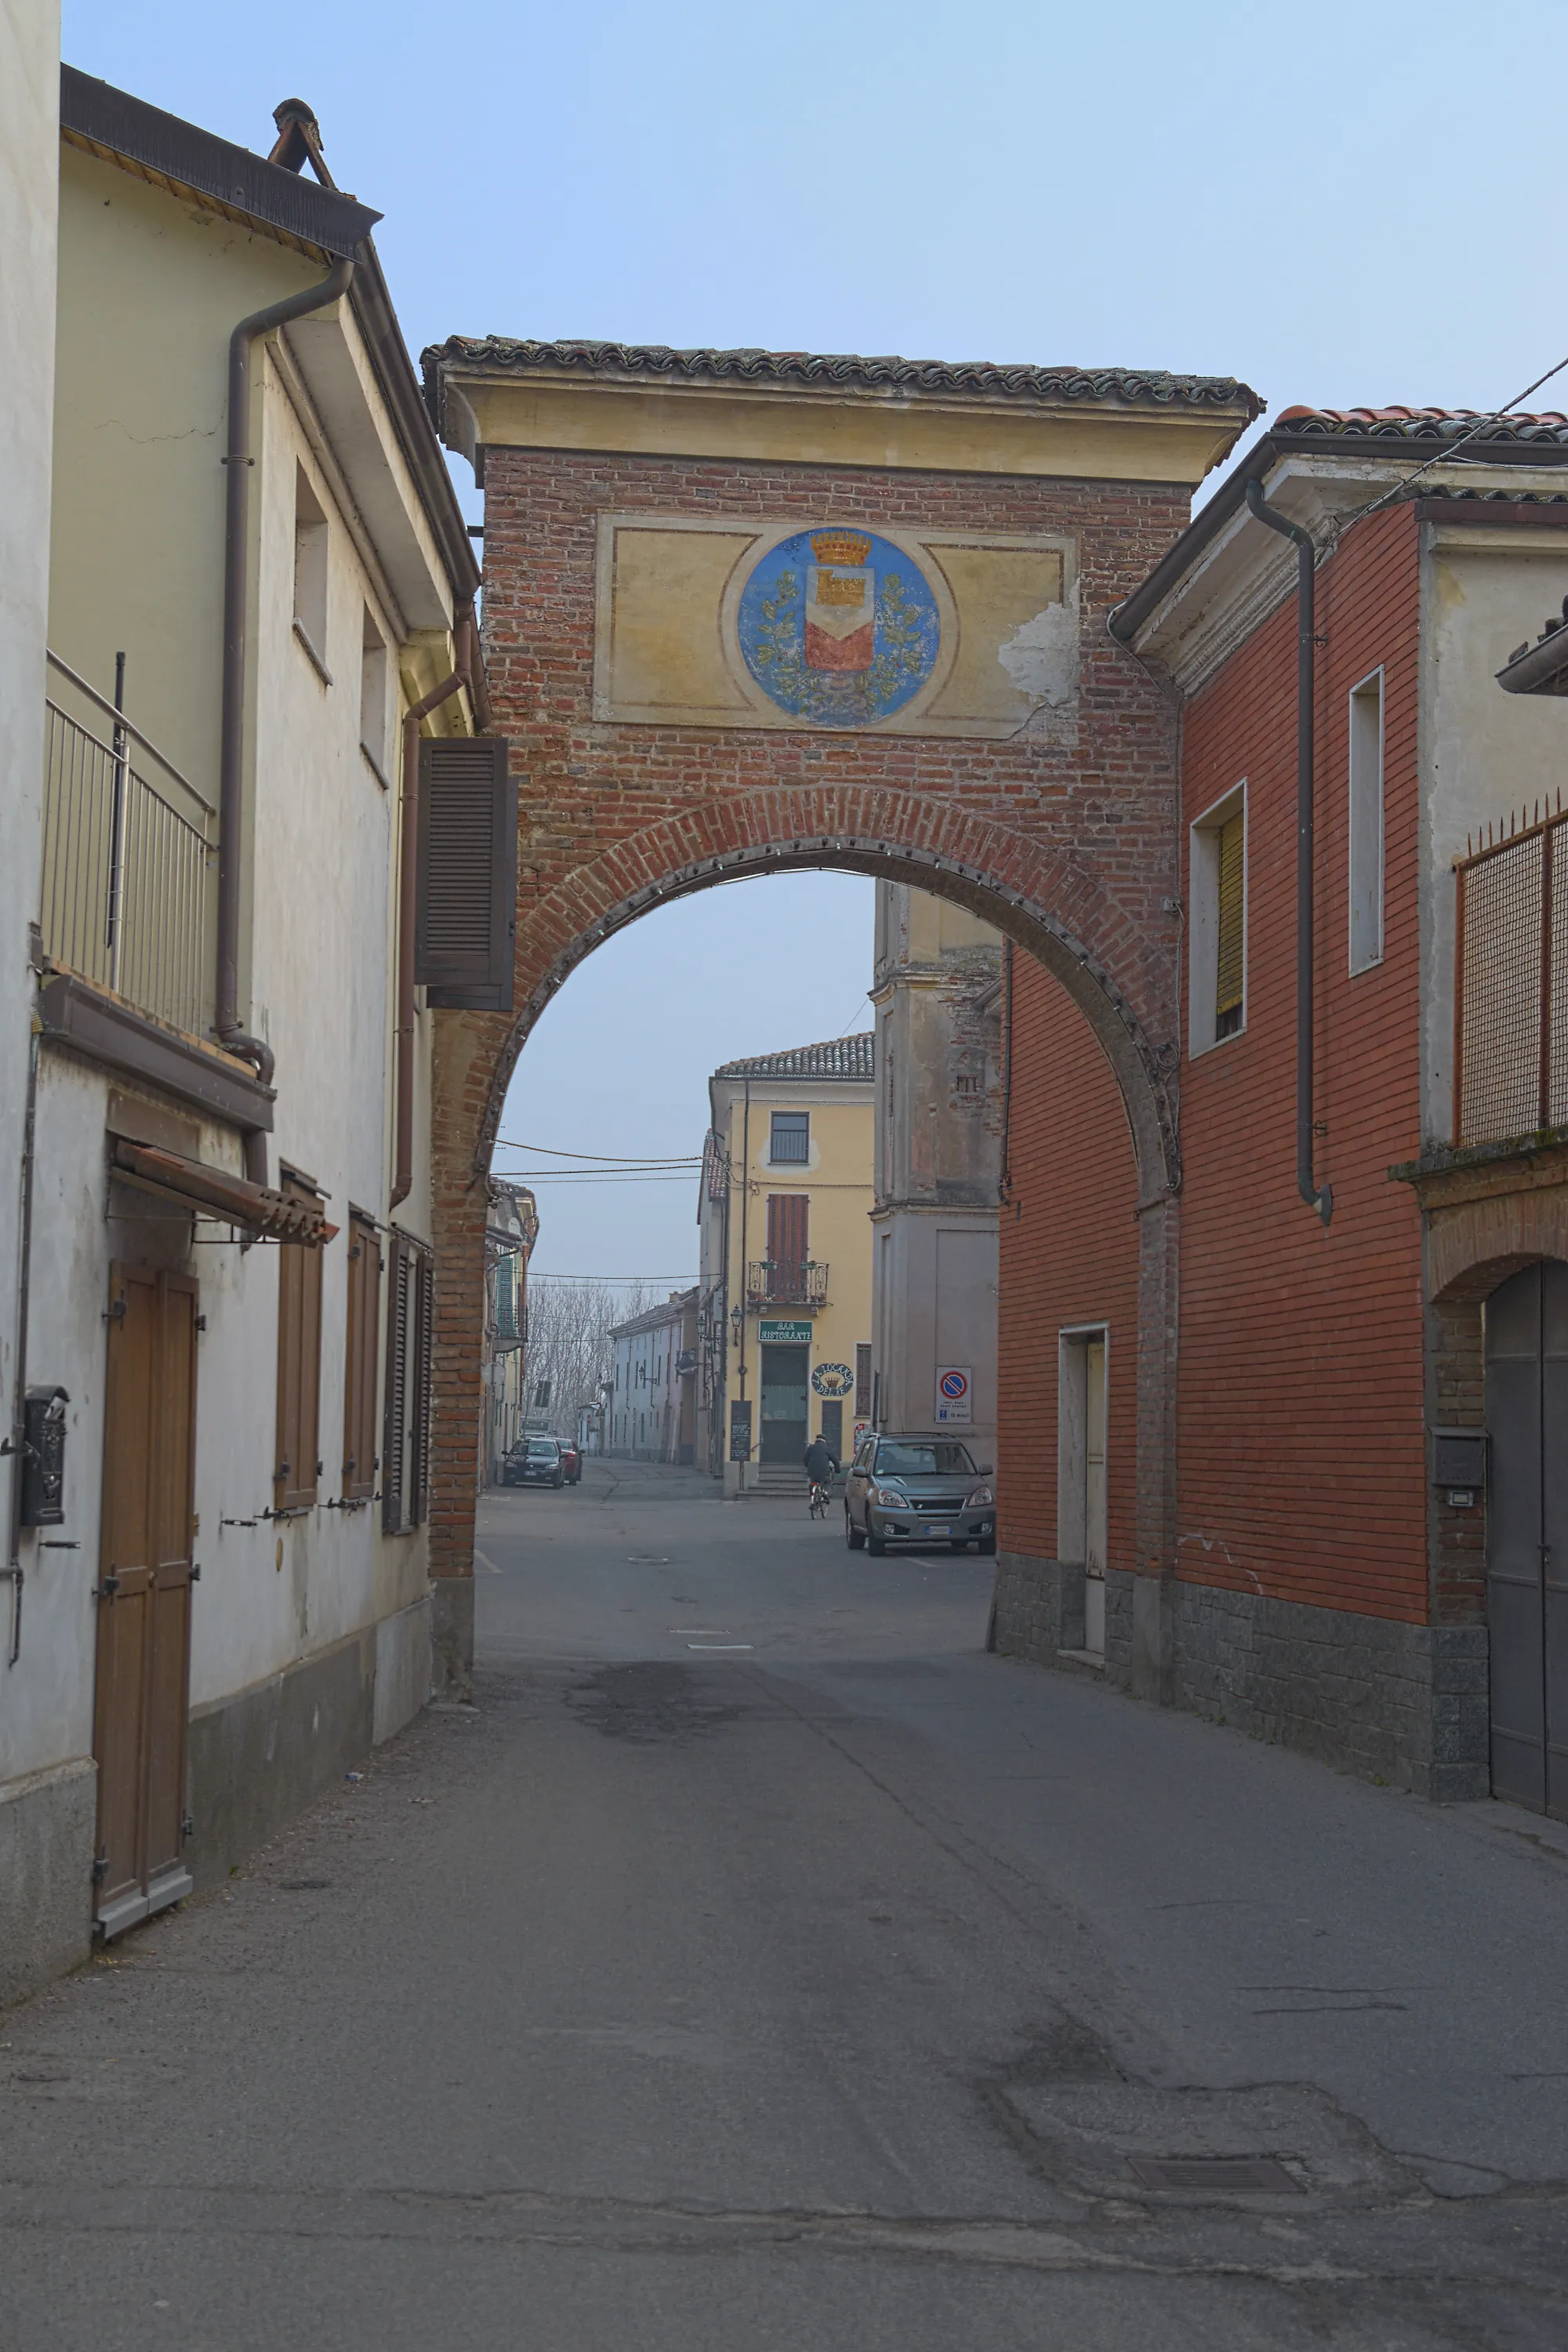 Photo showing: Porta medioevale di ingresso